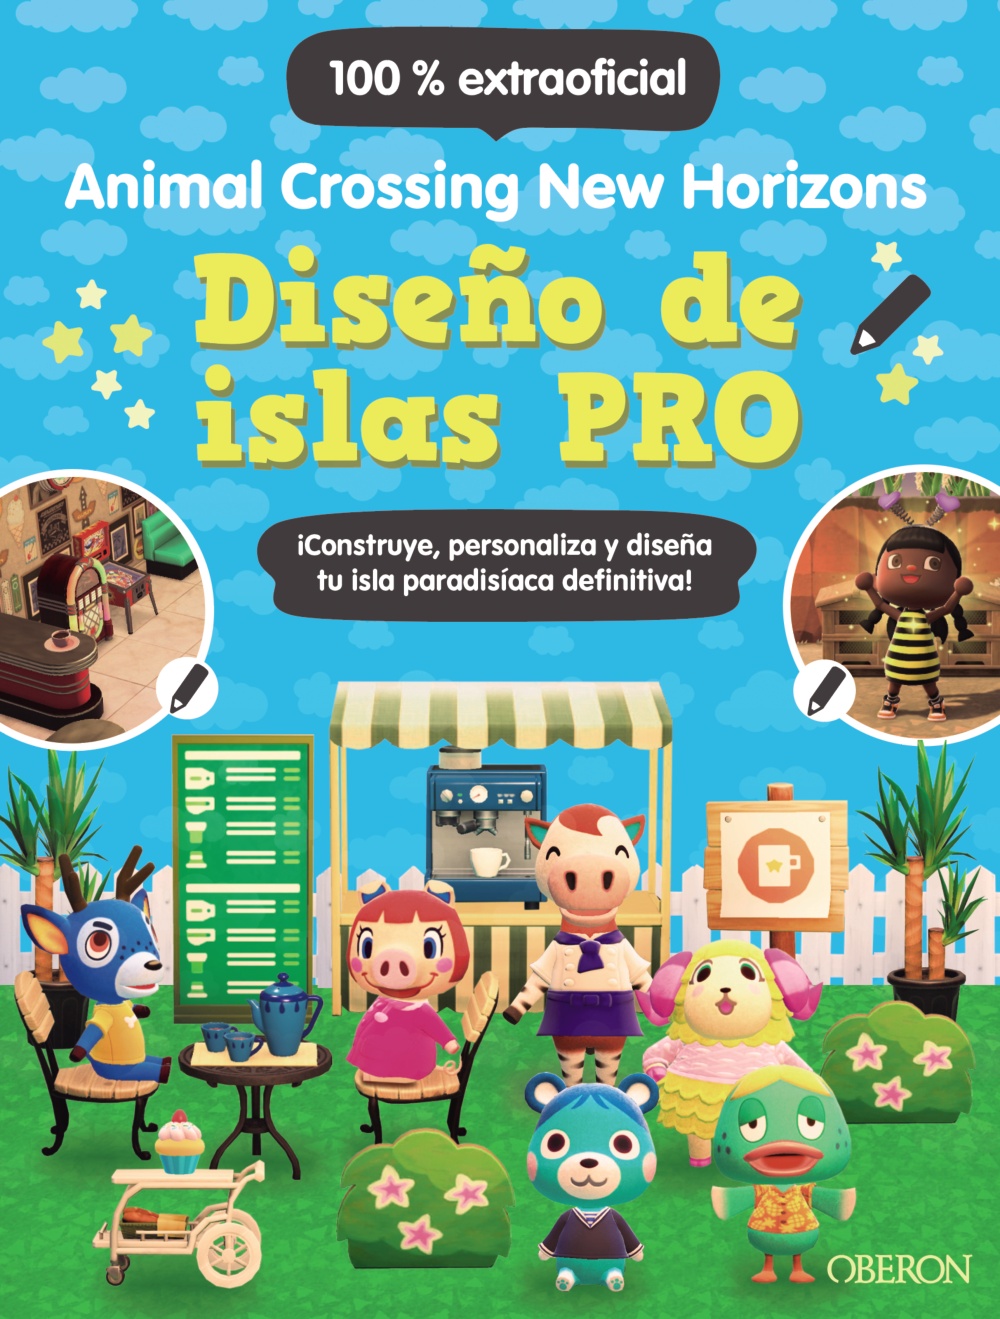 diseno-de-islas-pro-animal-crossing-new-horizons-978-84-415-4504-5.jpg